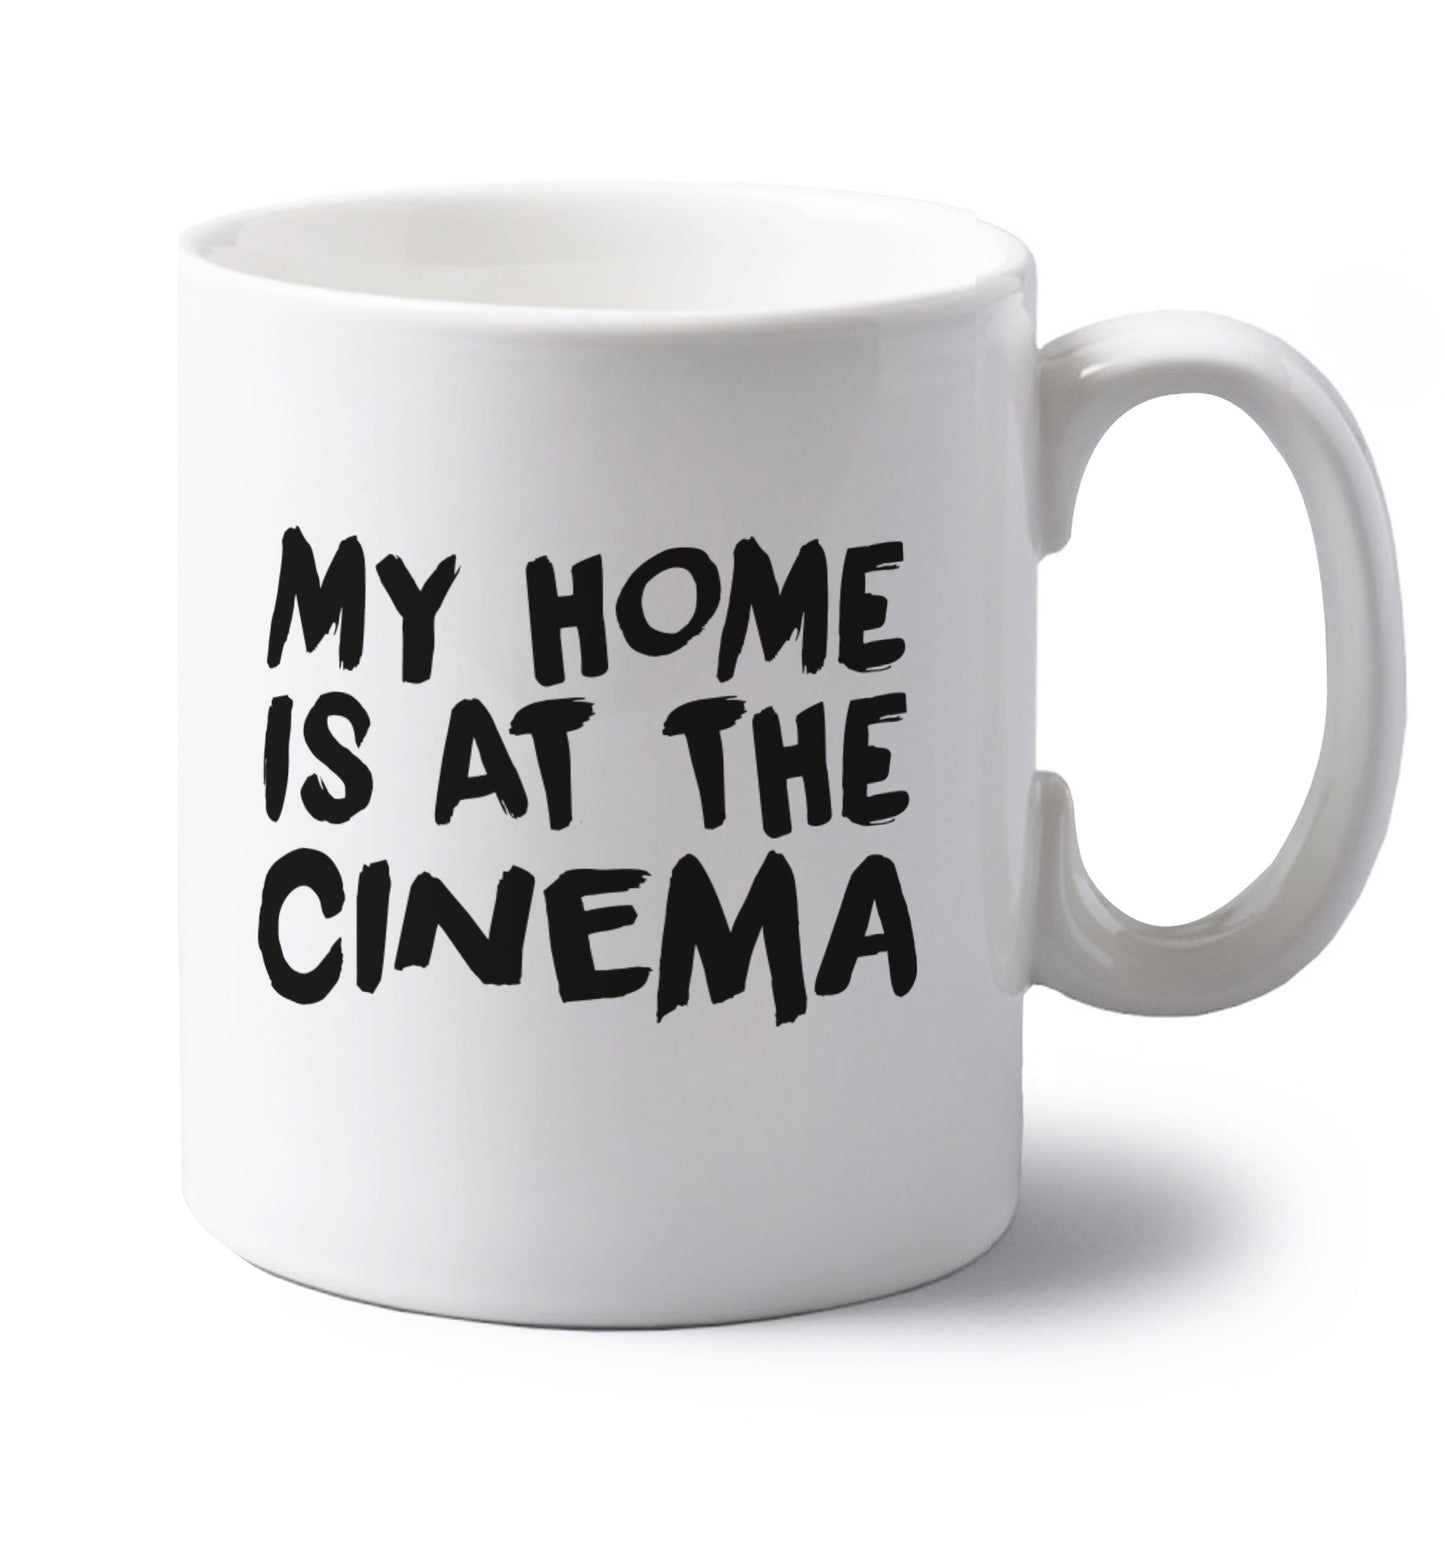 My home is at the cinema left handed white ceramic mug 